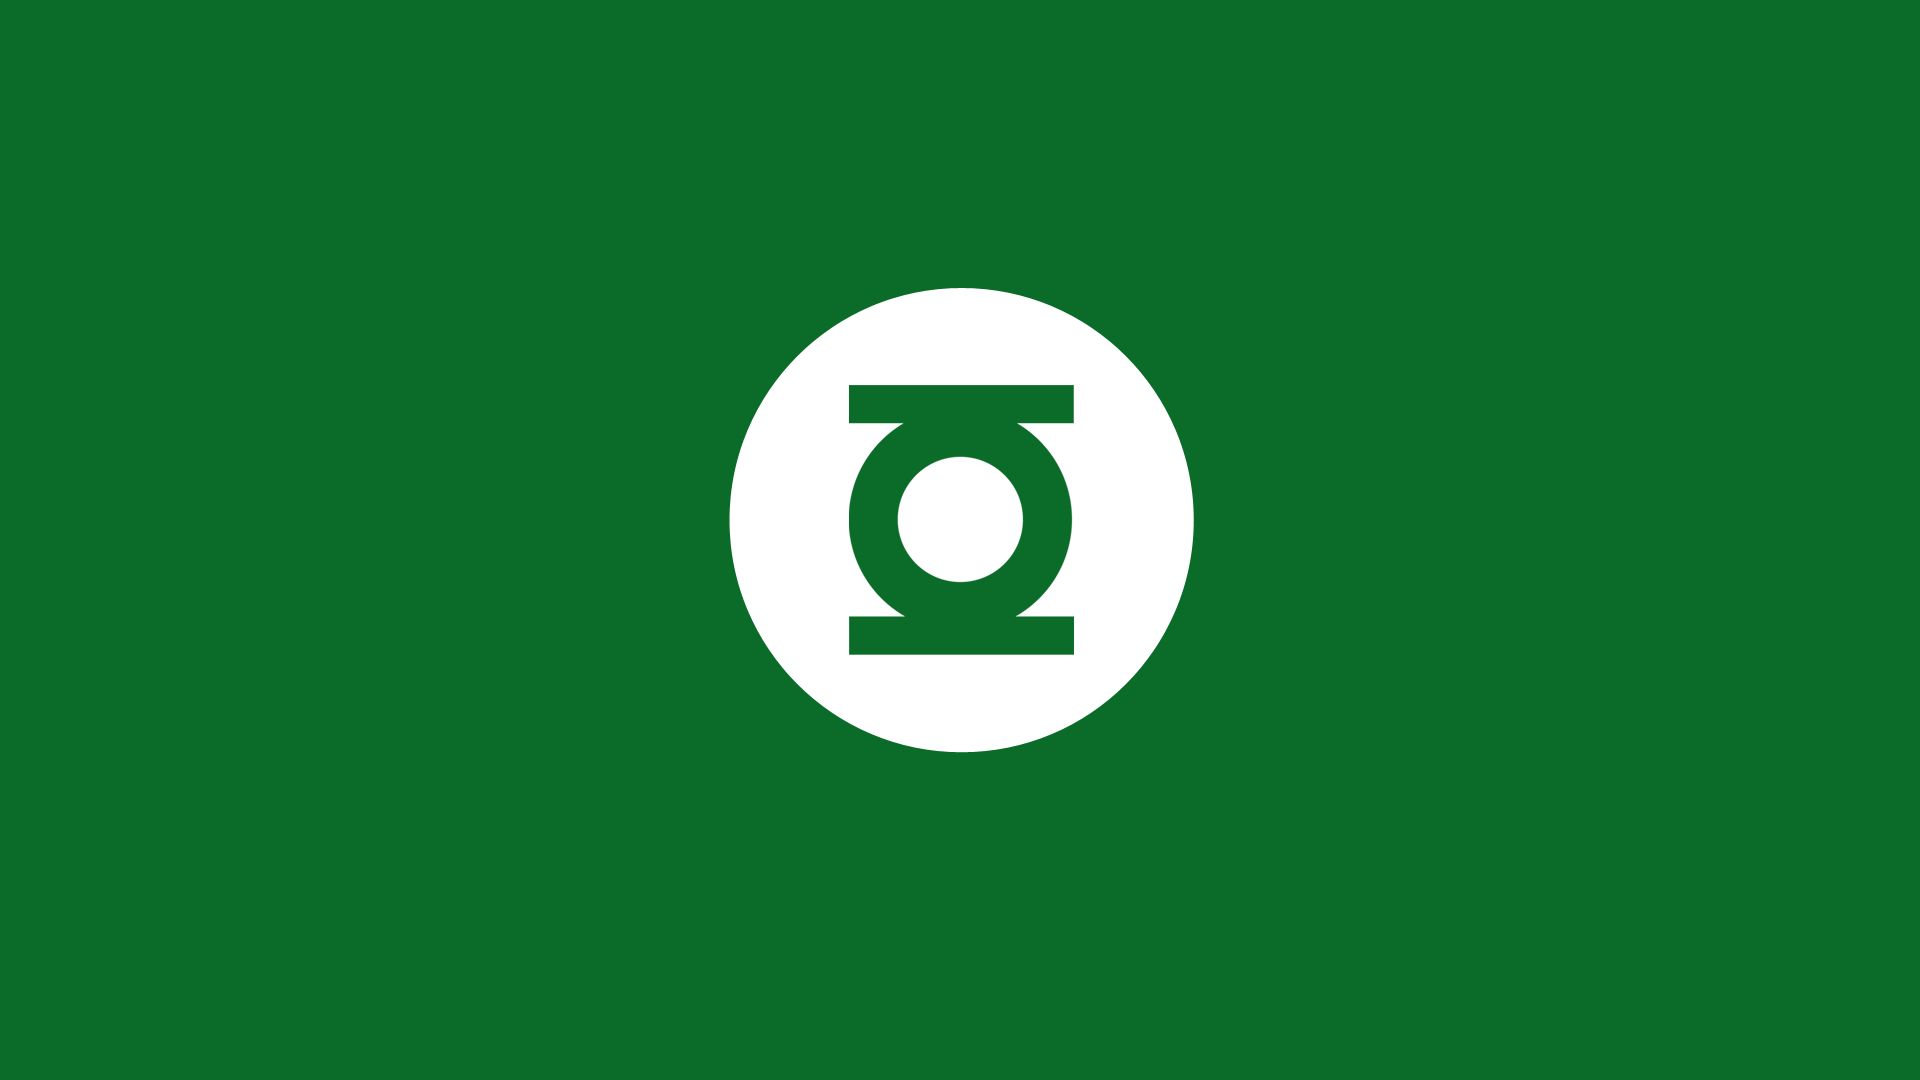 Green Lantern Logo Wallpapers 1920x1080